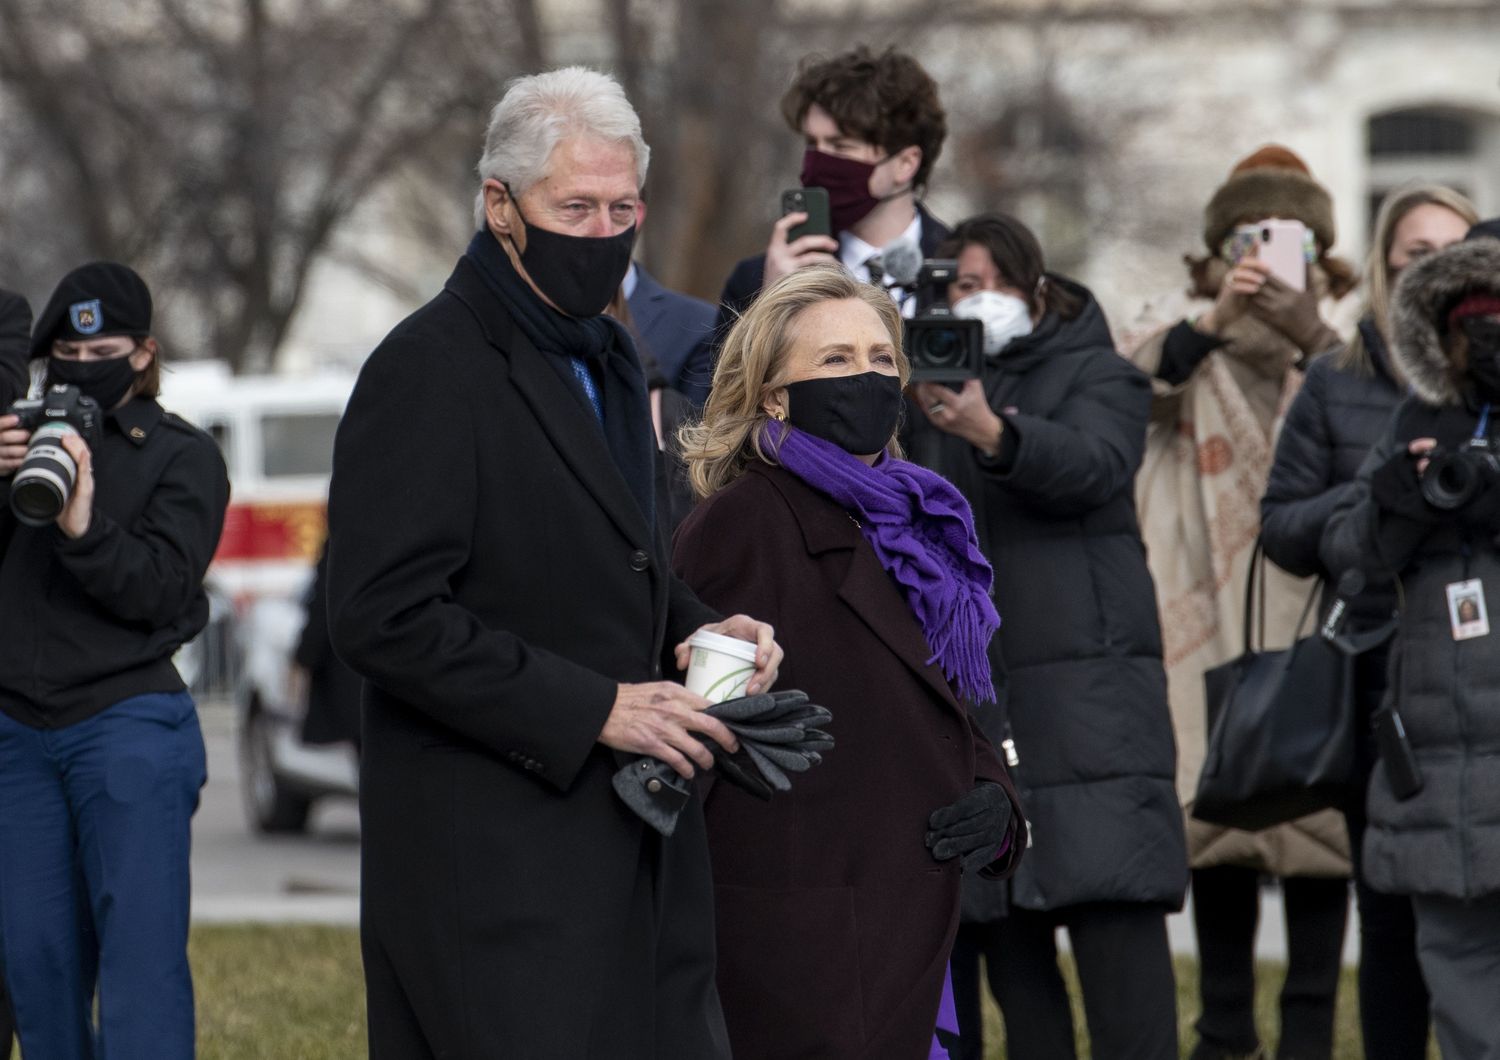 Bill e Hillary Clinton